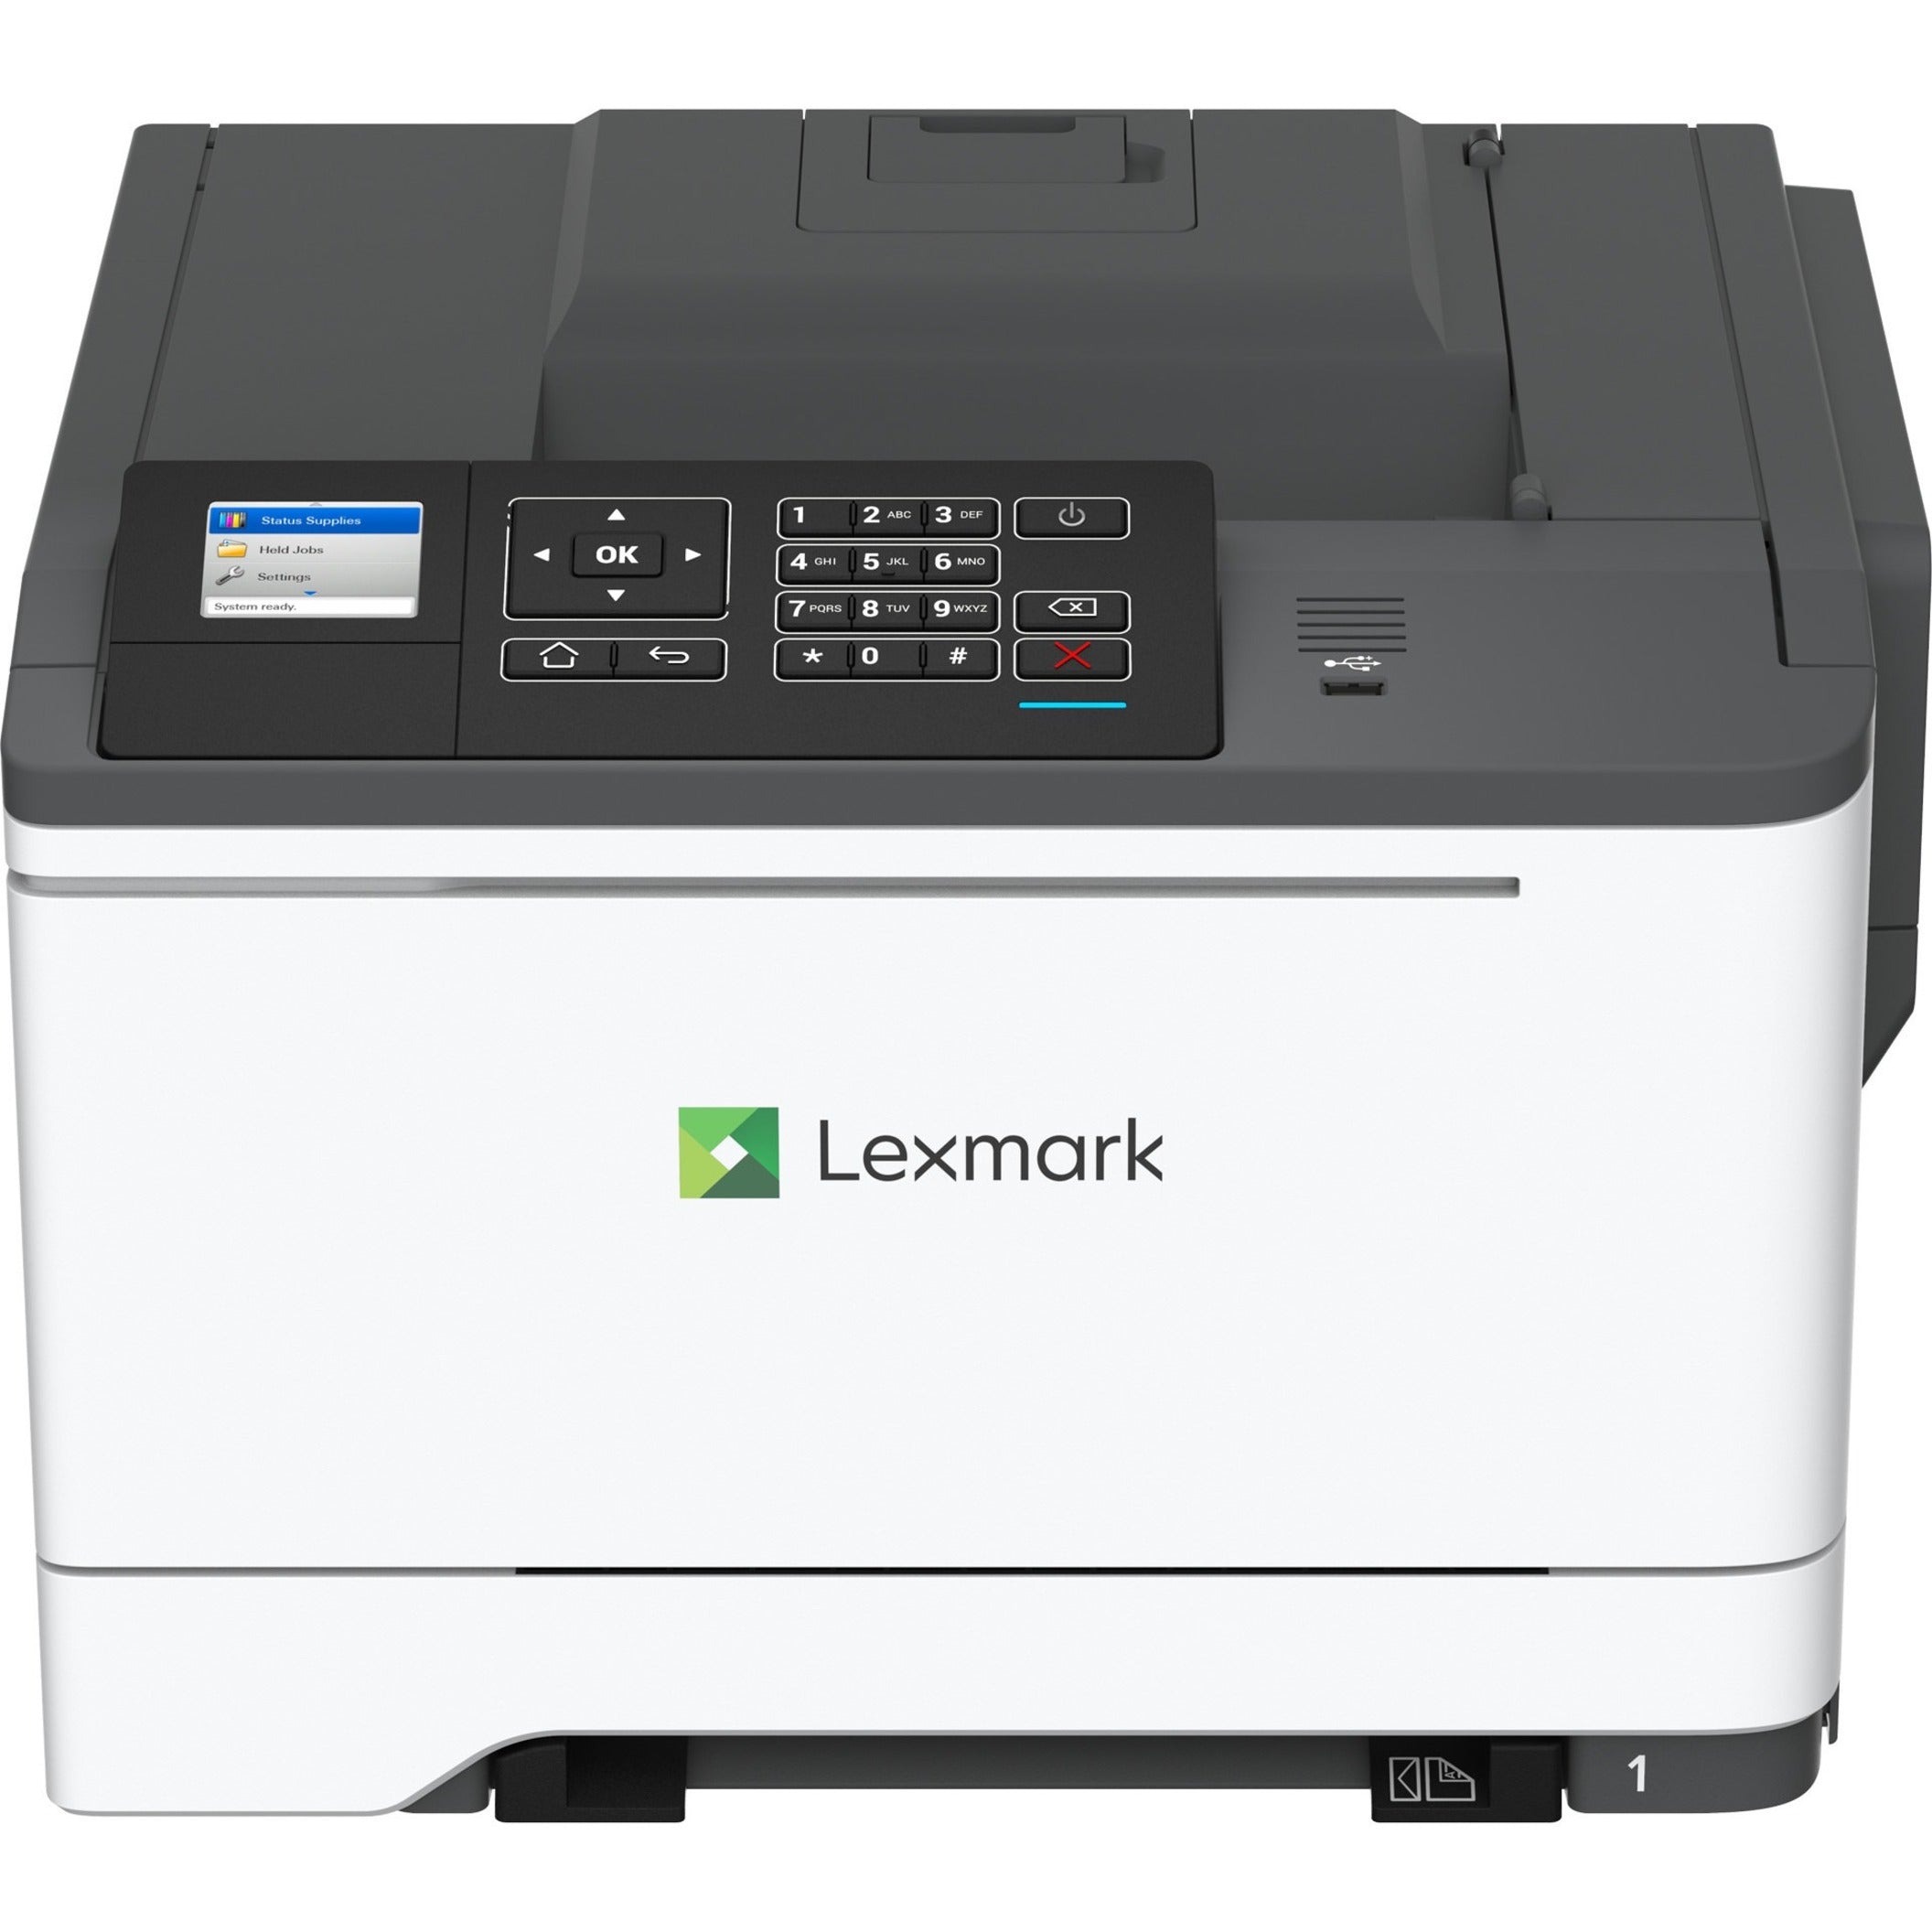 Lexmark 42C0060 CS521dn Color Laser Printer, Automatic Duplex Printing, USB Direct Printing, 35 ppm Print Speed